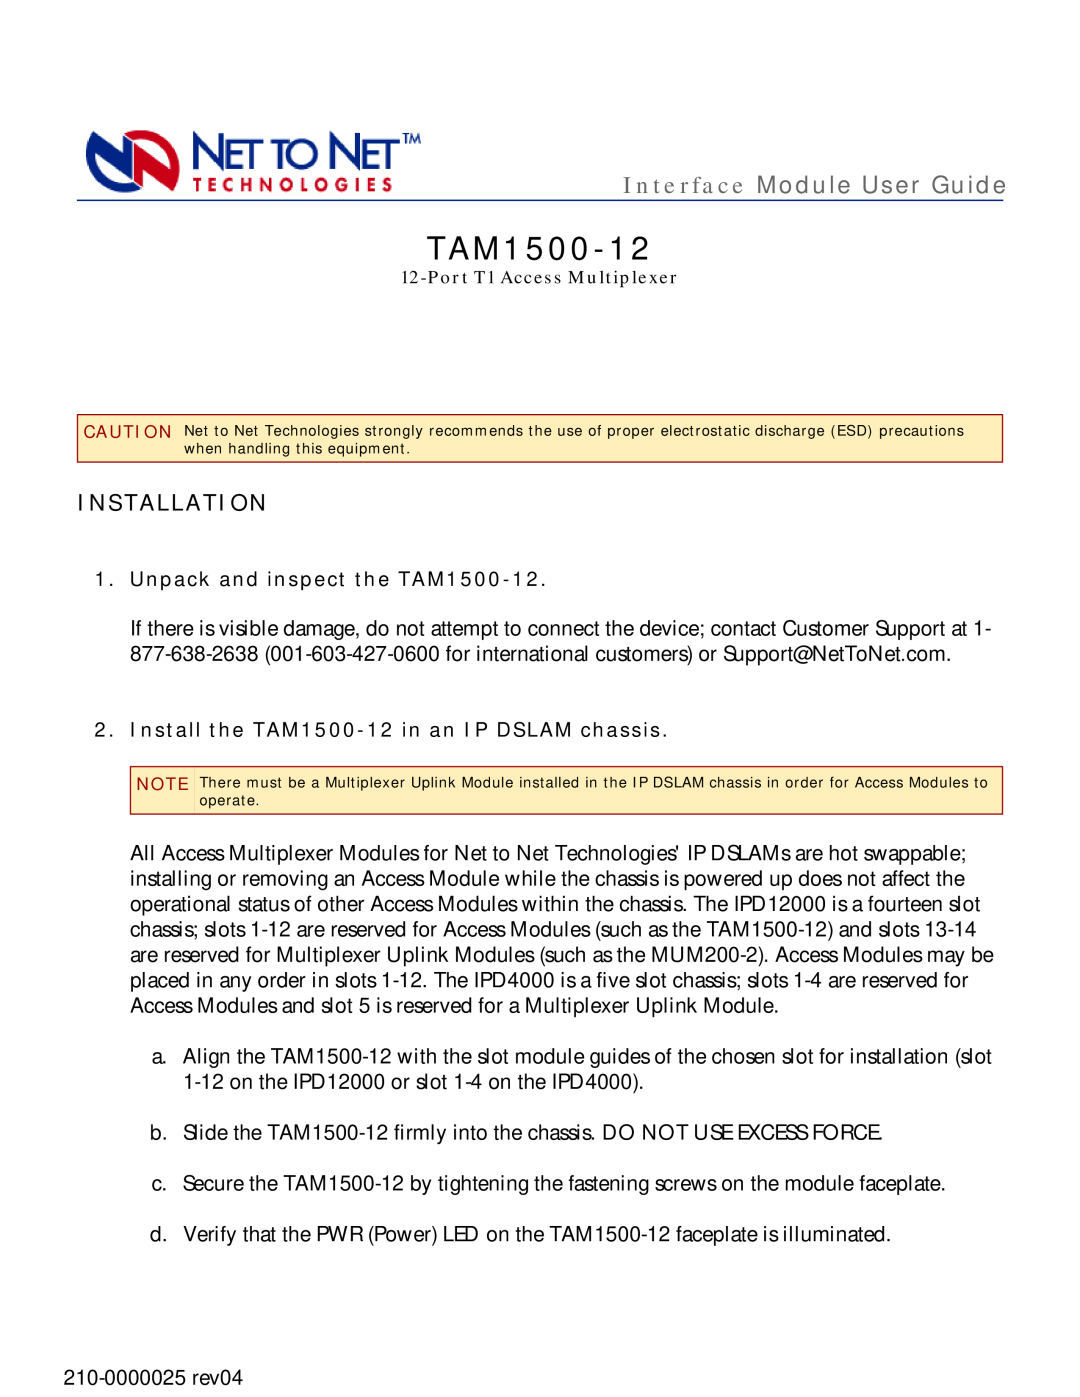 Paradyne TAM1500-12 manual Installation, Interface Module User Guide 